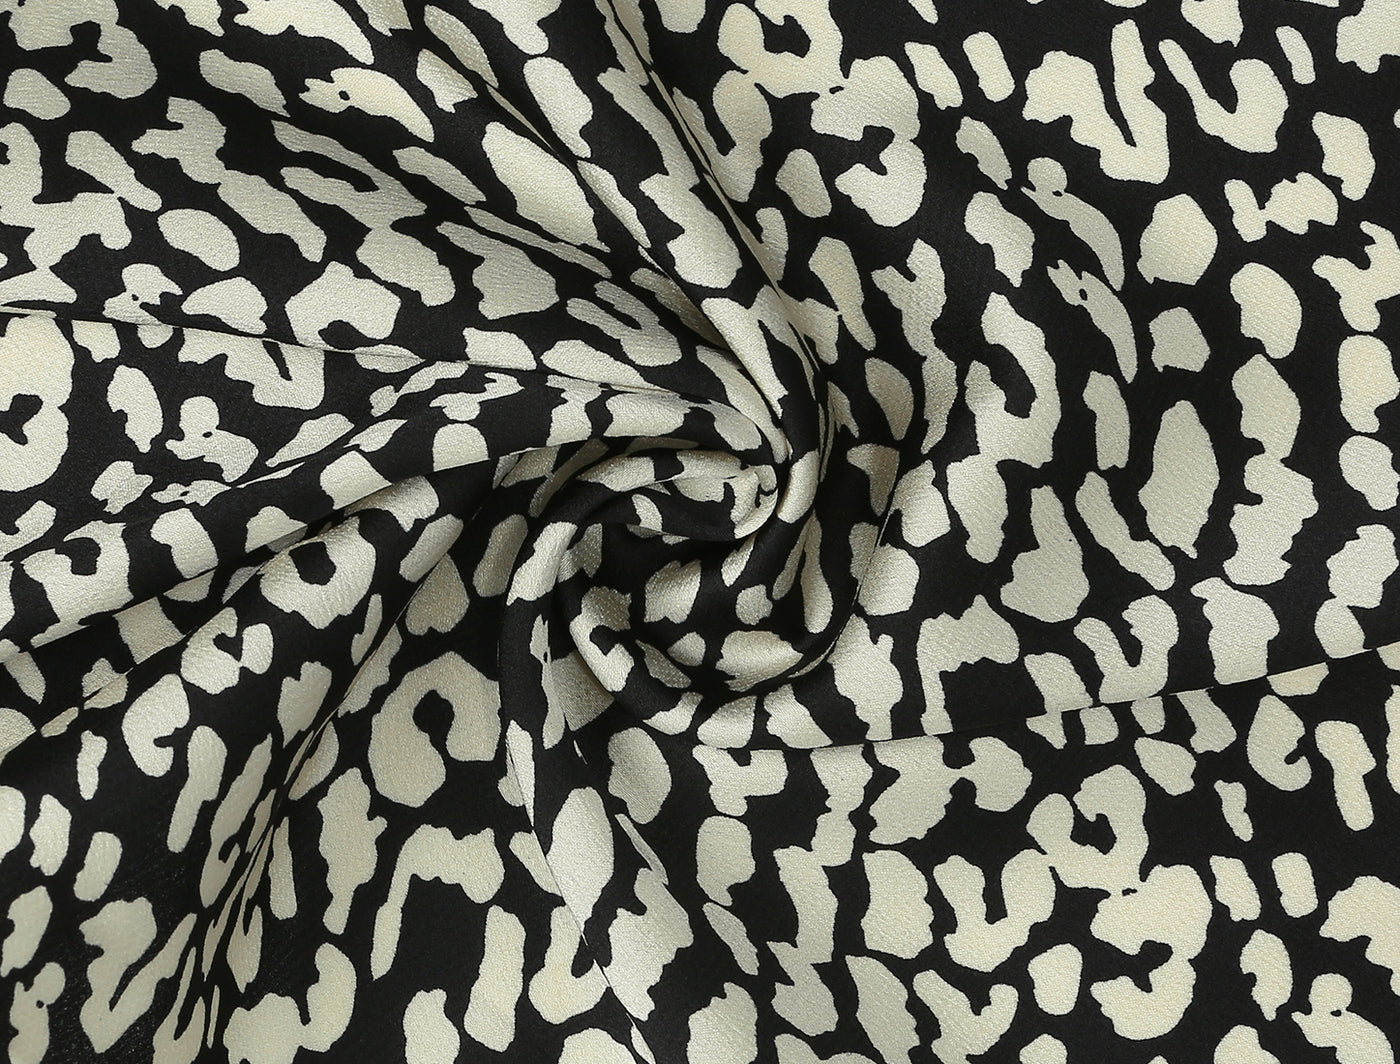 Allegra K Animal Print Leopard Rhombus Rhombic Neck Scarf Cheetah Bandana